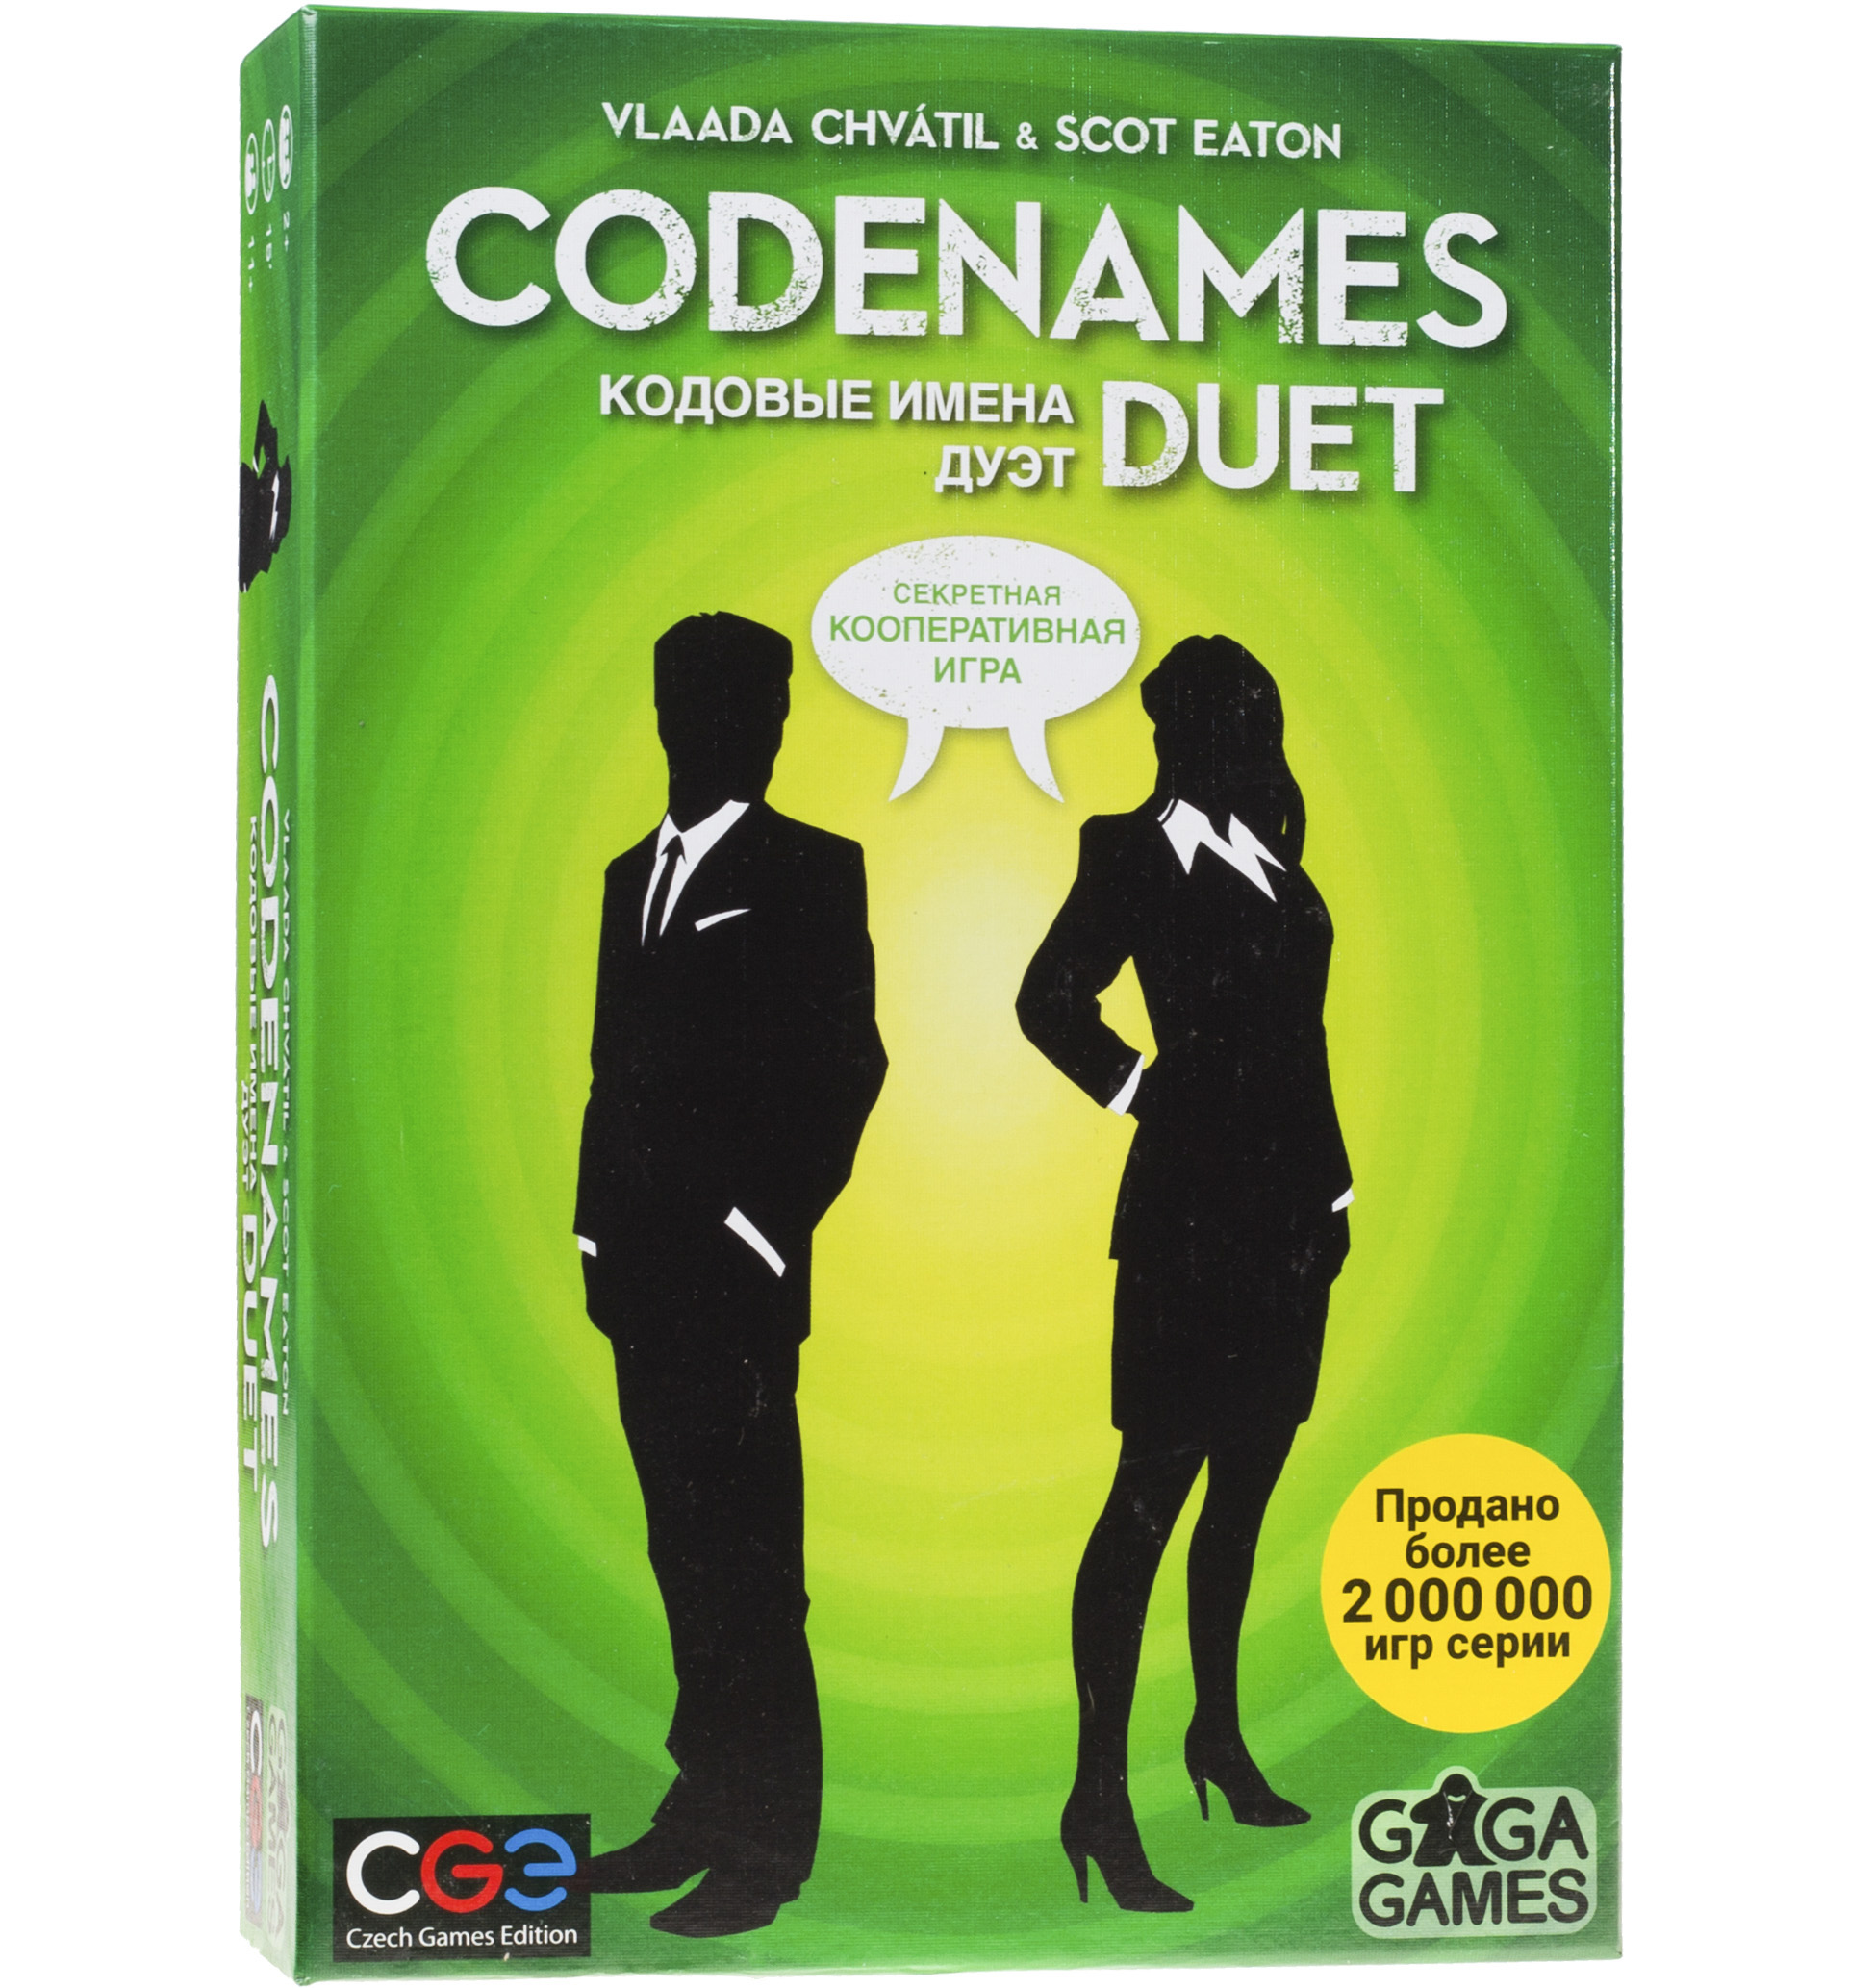 Code name game. Codenames игра. Игра кодовые имена дуэт. Настольная игра коднеймс. Кодовые имена дуэт настольная игра.